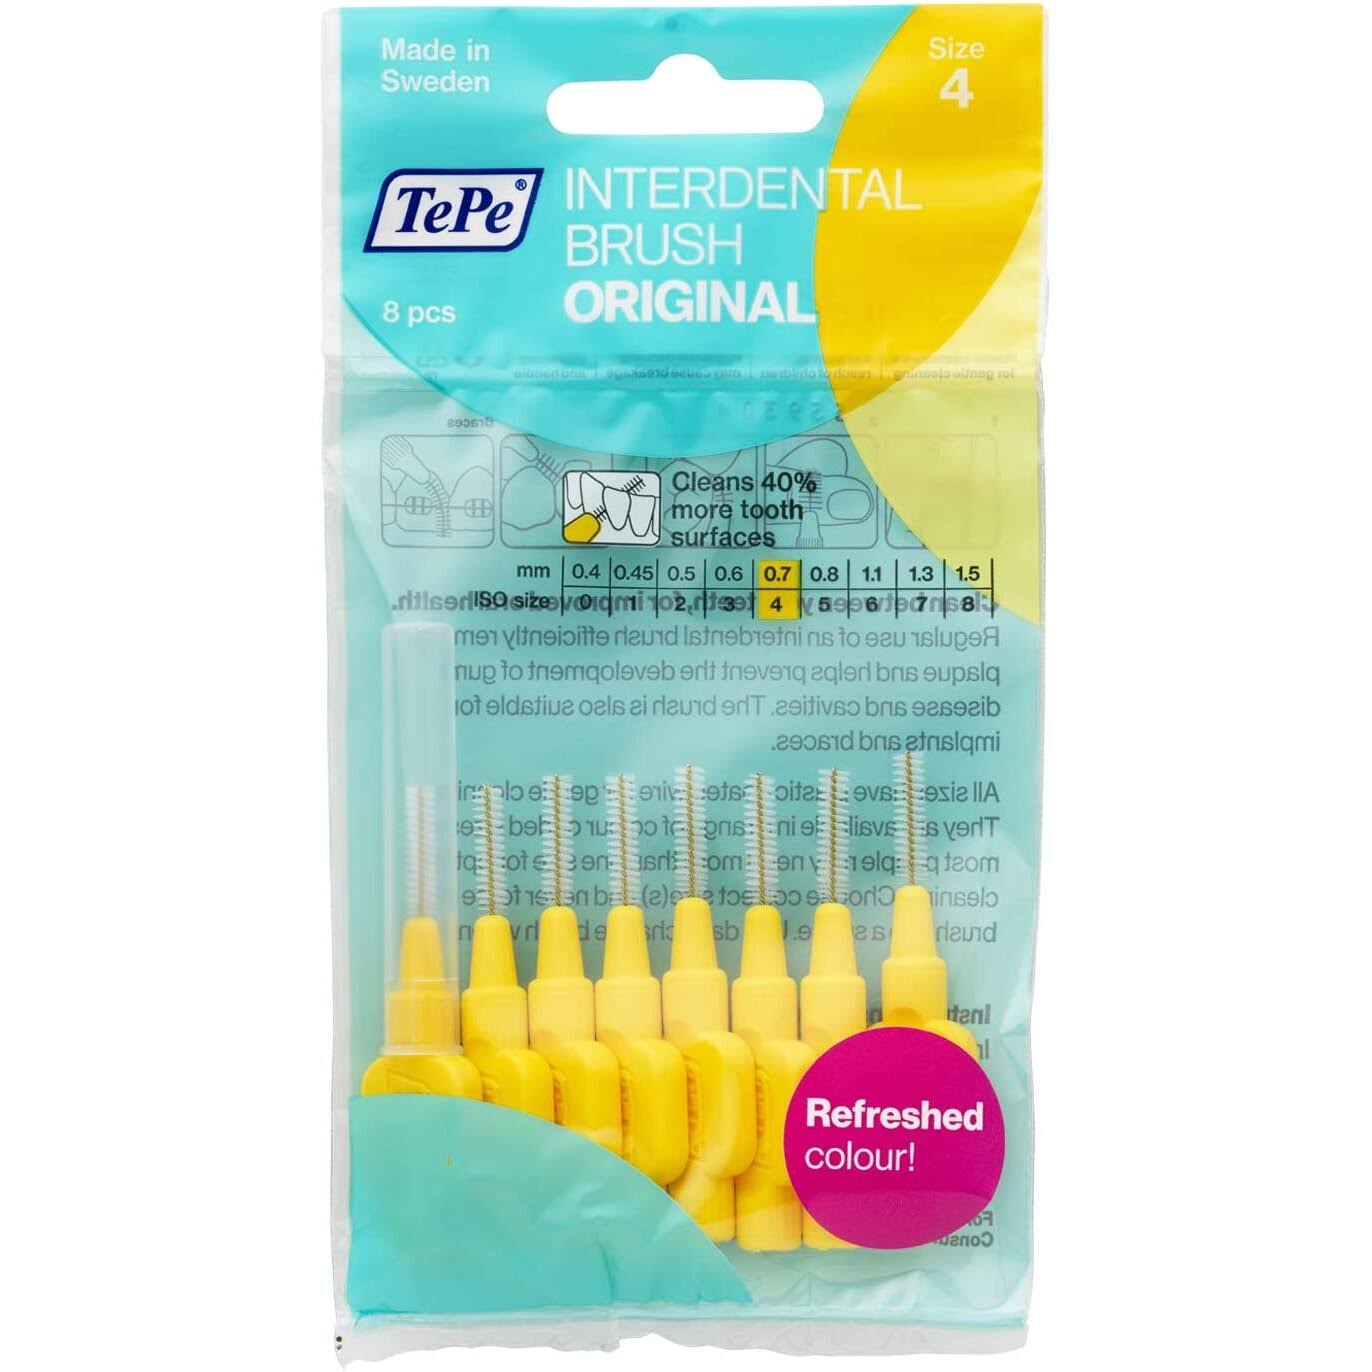 TePe Interdental Brush Original Yellow 0.7mm size 4 - 8pcs